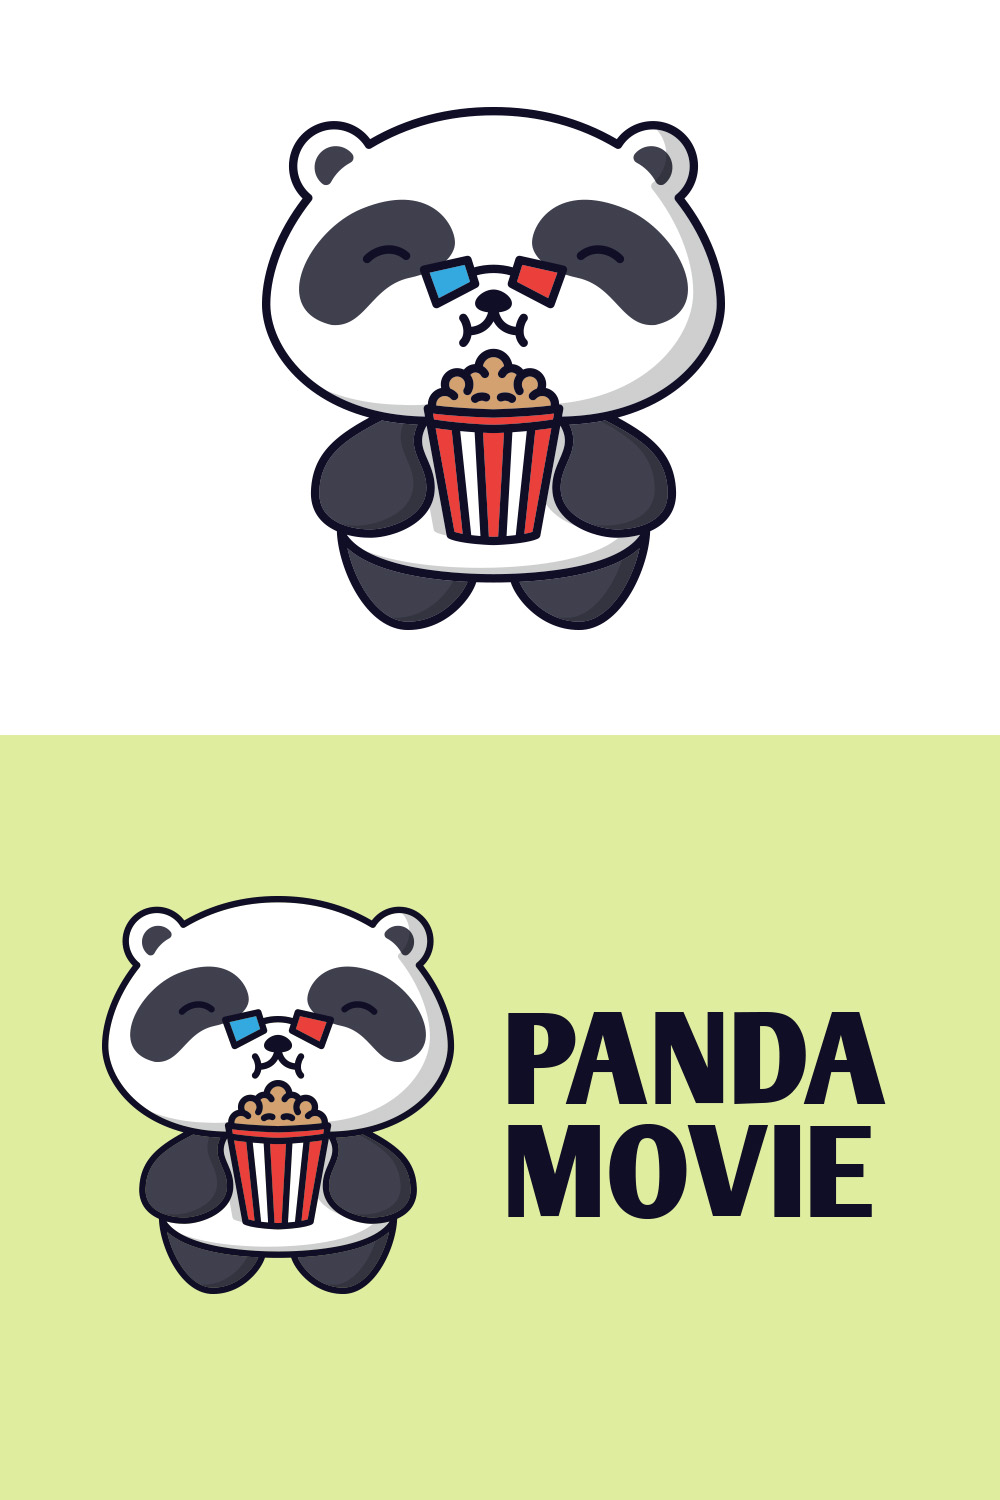 Panda Movie Logo Design pinterest preview image.